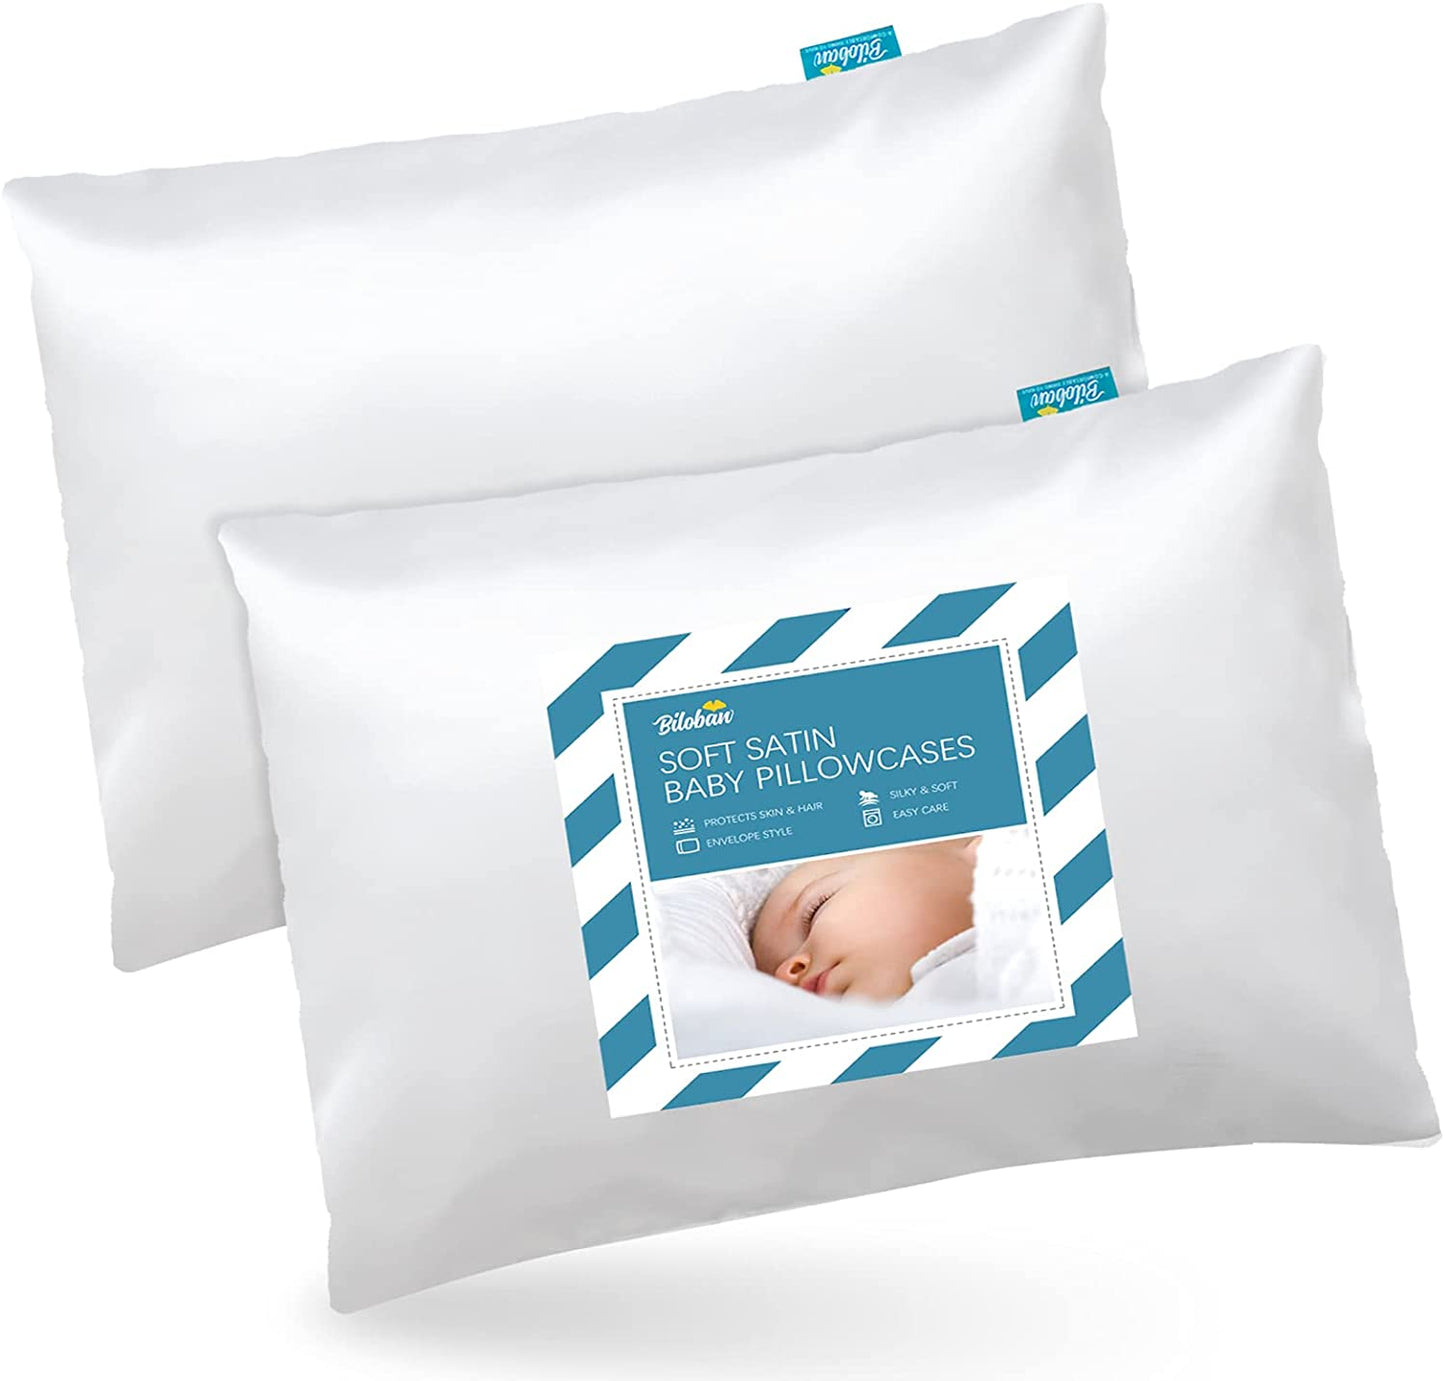 Toddler Pillowcase- 2 pack, Silky Soft Satin, Envelope Style, White